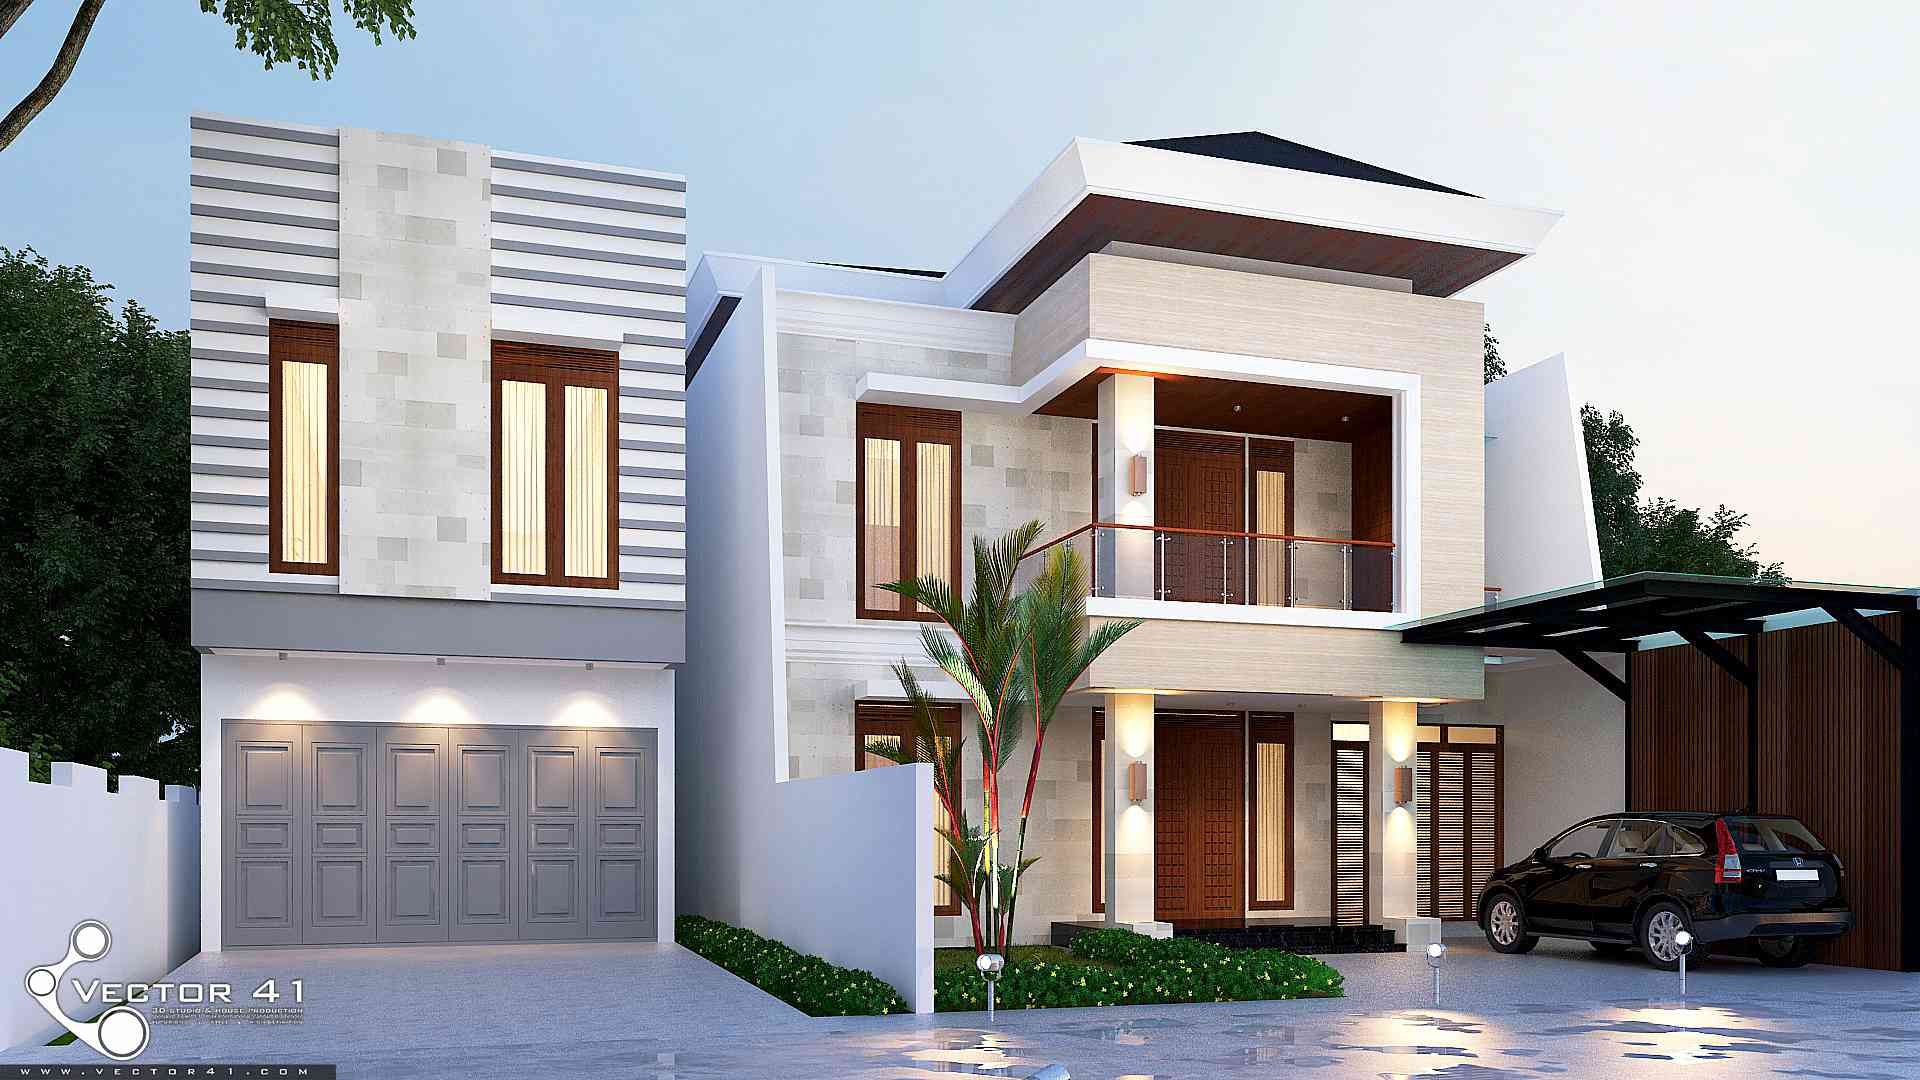 Exterior House_Medan (Mr. Andi), VECTOR41 VECTOR41 Casa prefabbricata